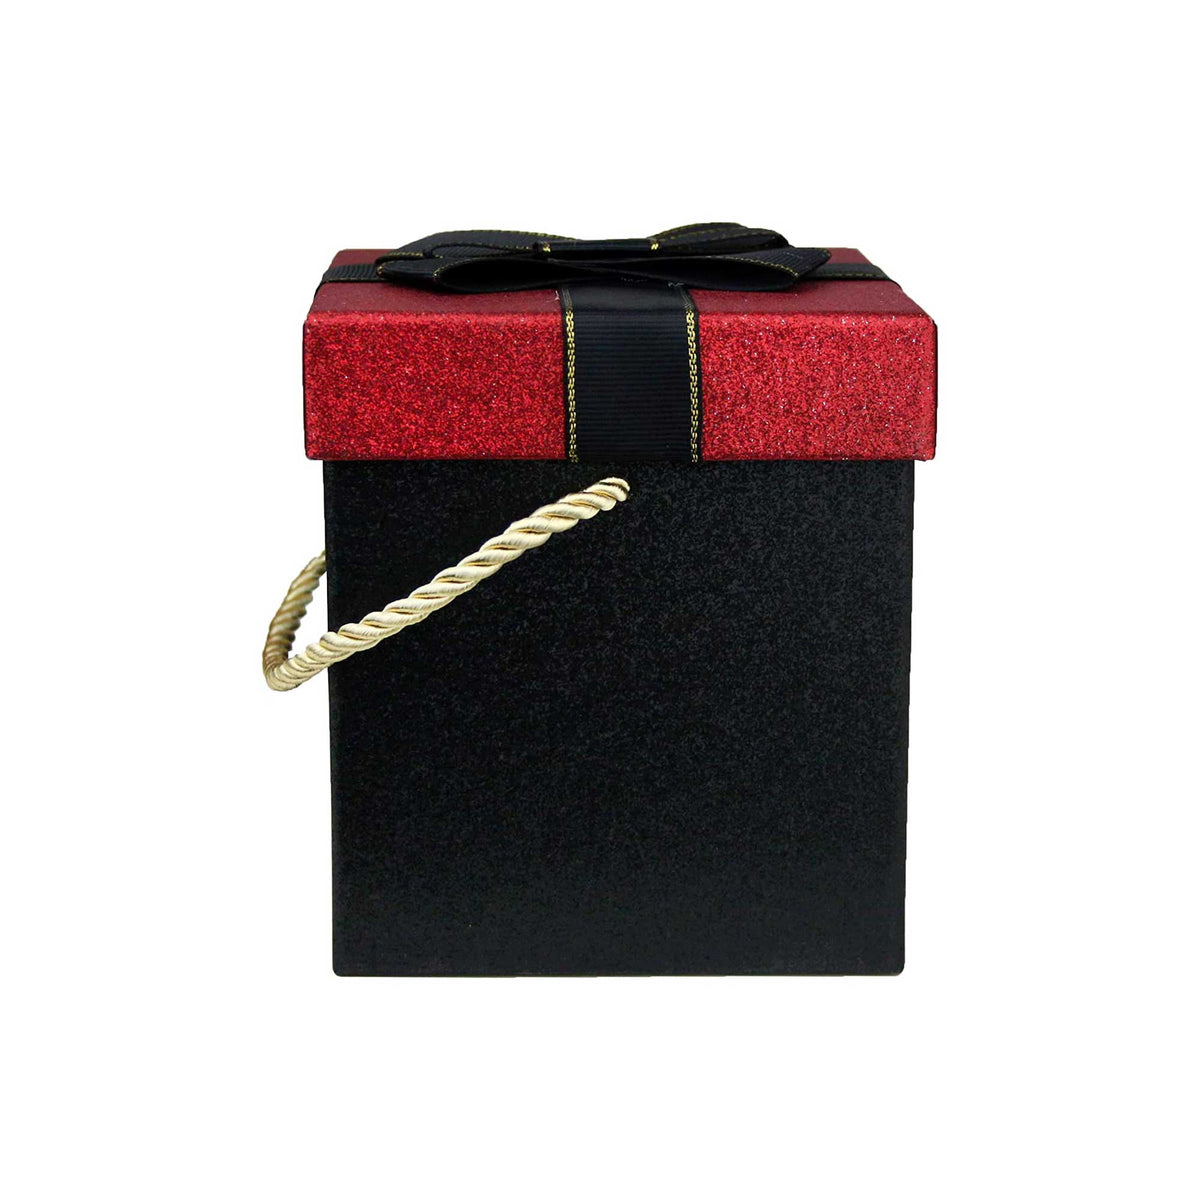 Luxury Black/Red Glitter Gift Box - Single